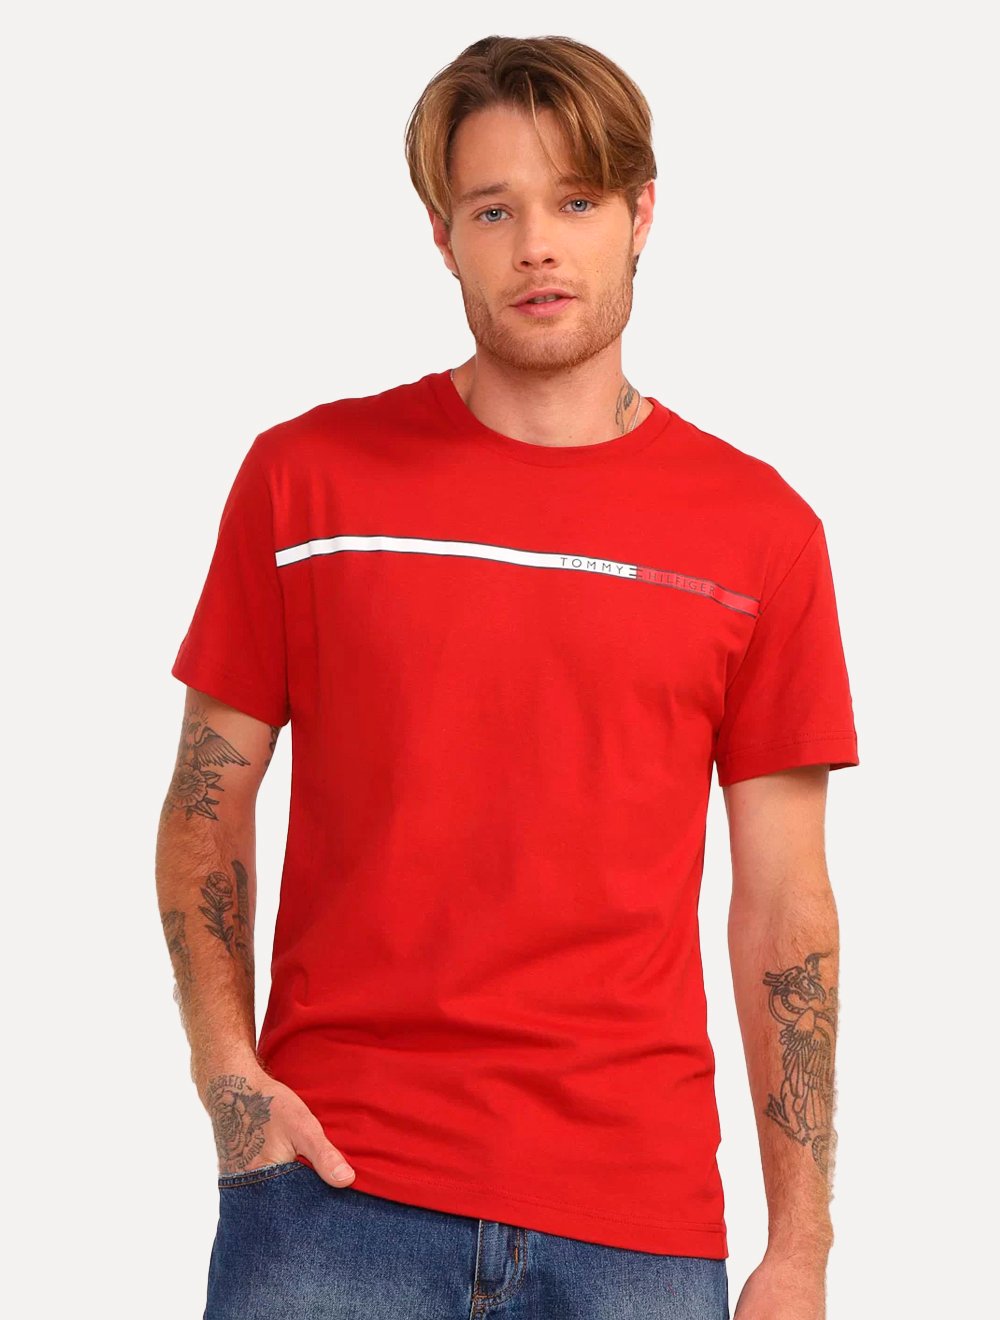 Camiseta Tommy Hilfiger Masculina Two Tone Chest Stripe Vermelha